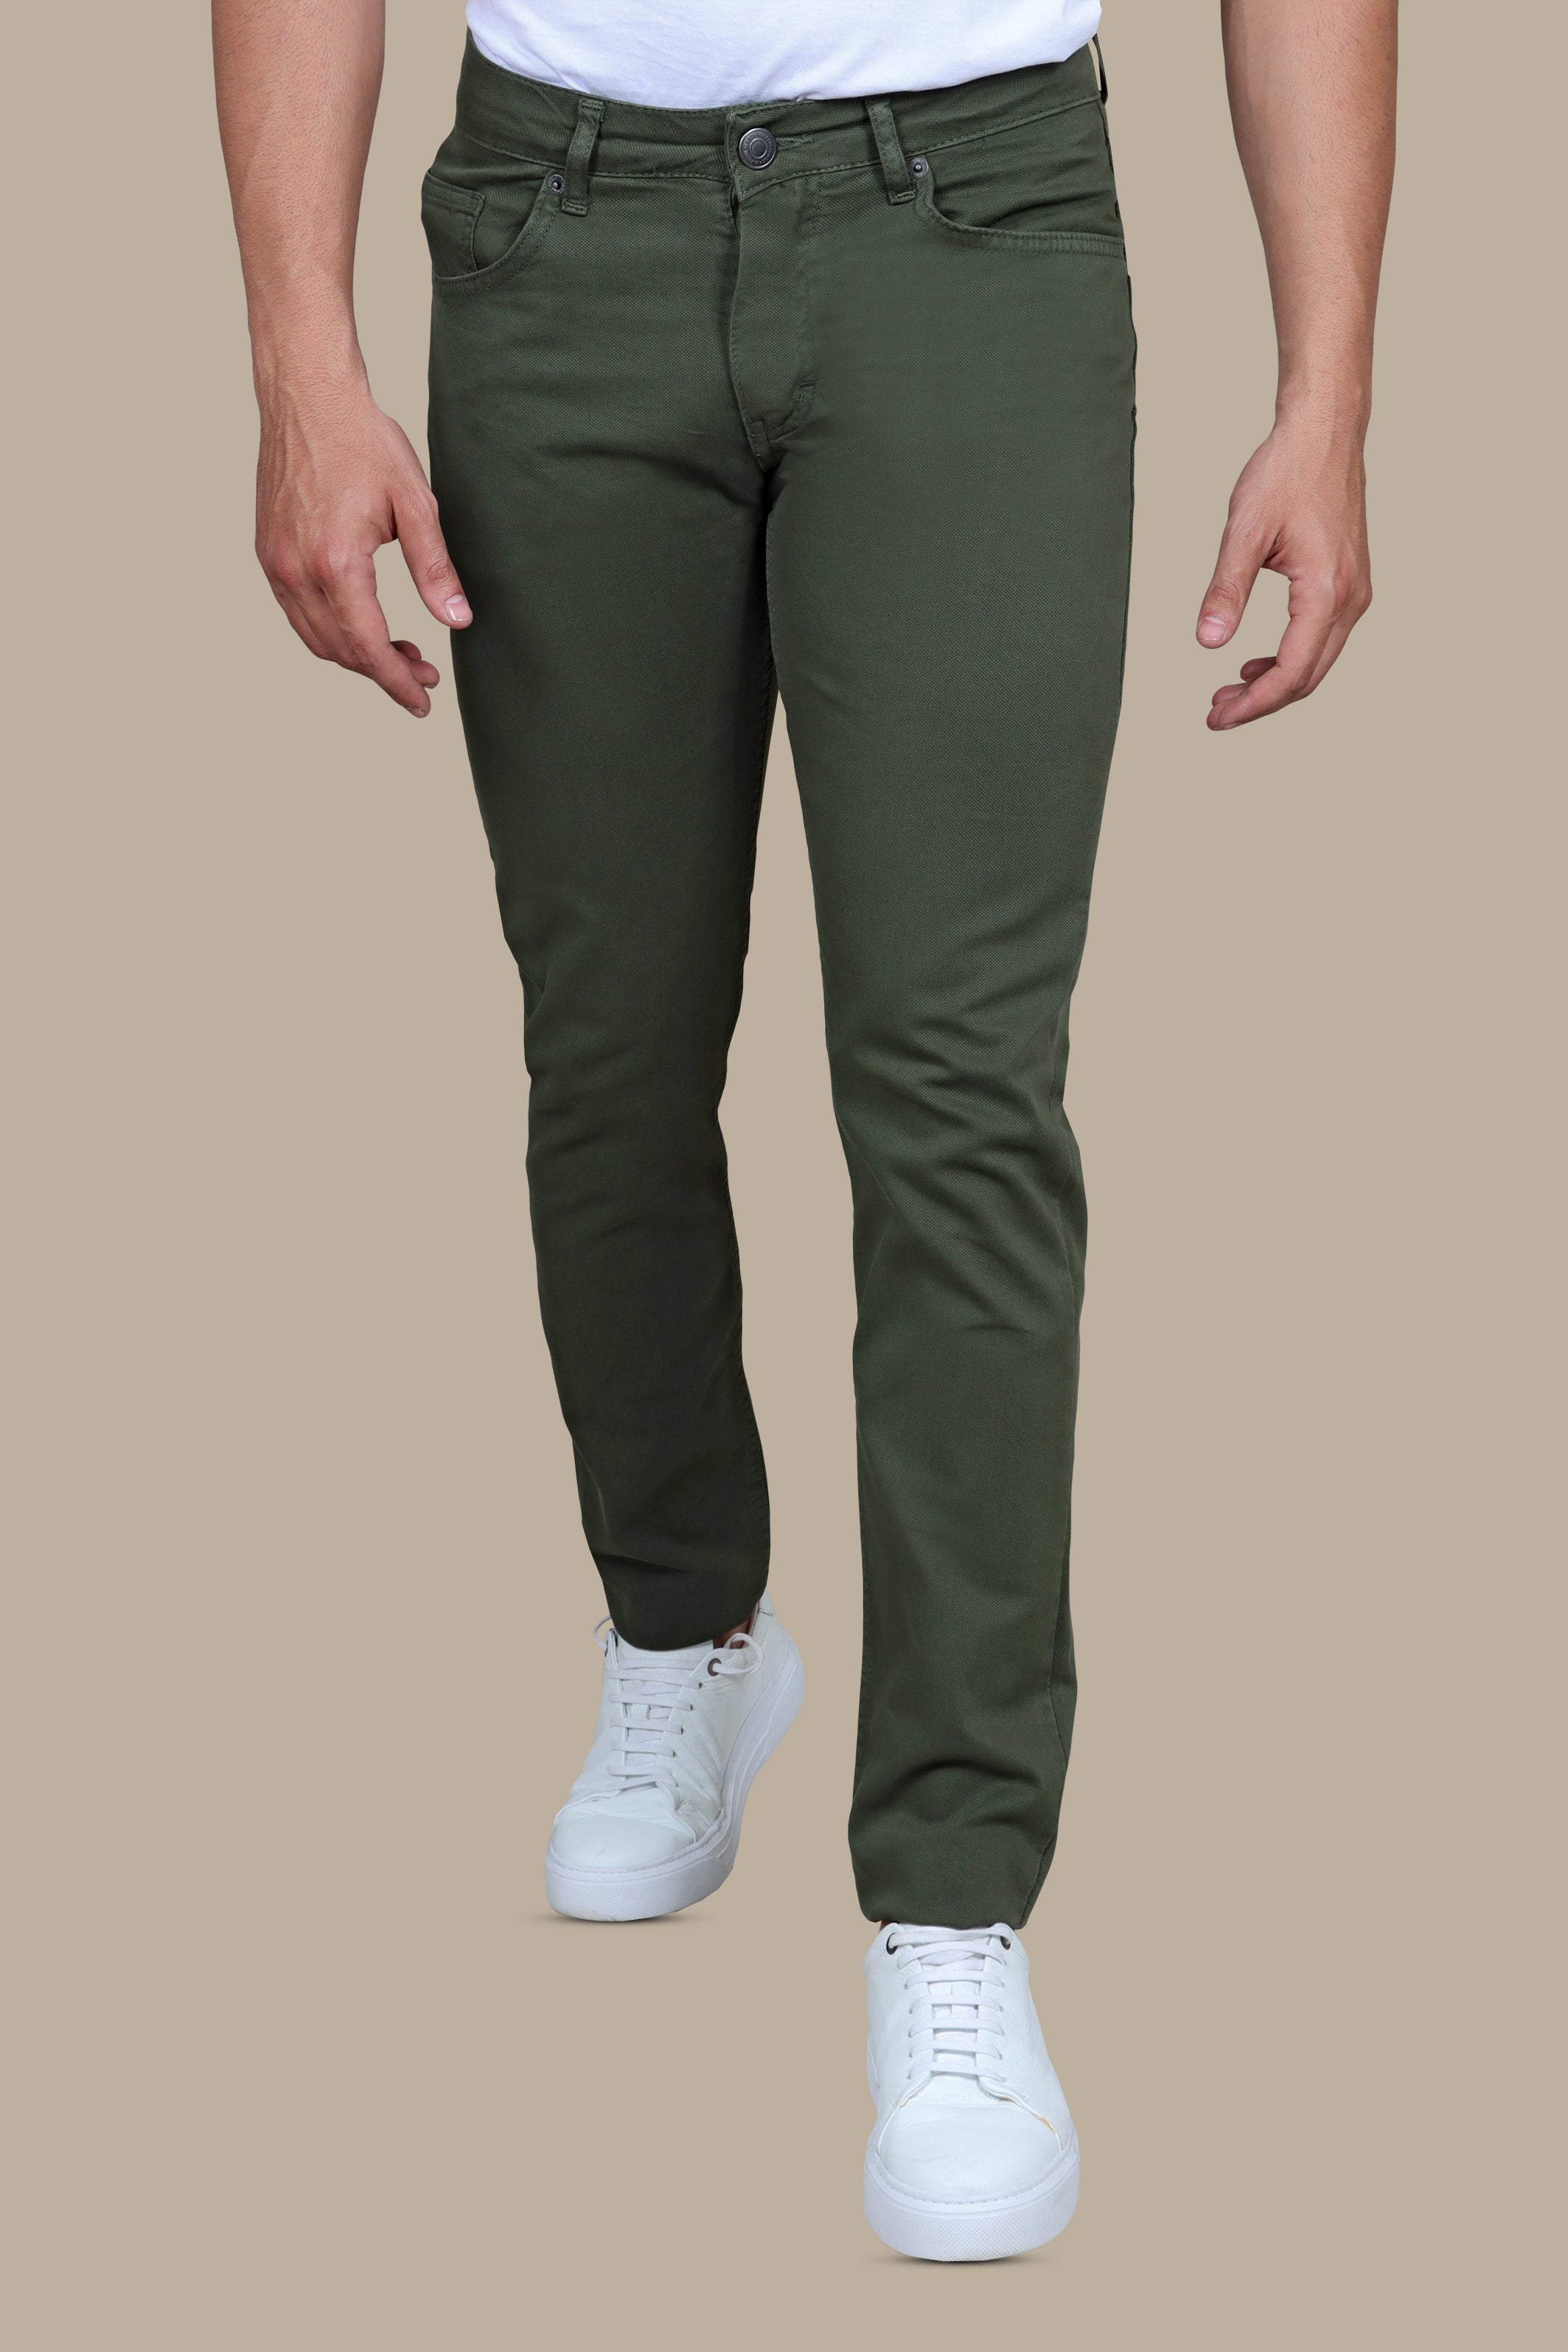 Emerald Elegance: 5-Pocket Oxford Pants in Rich Green Hues